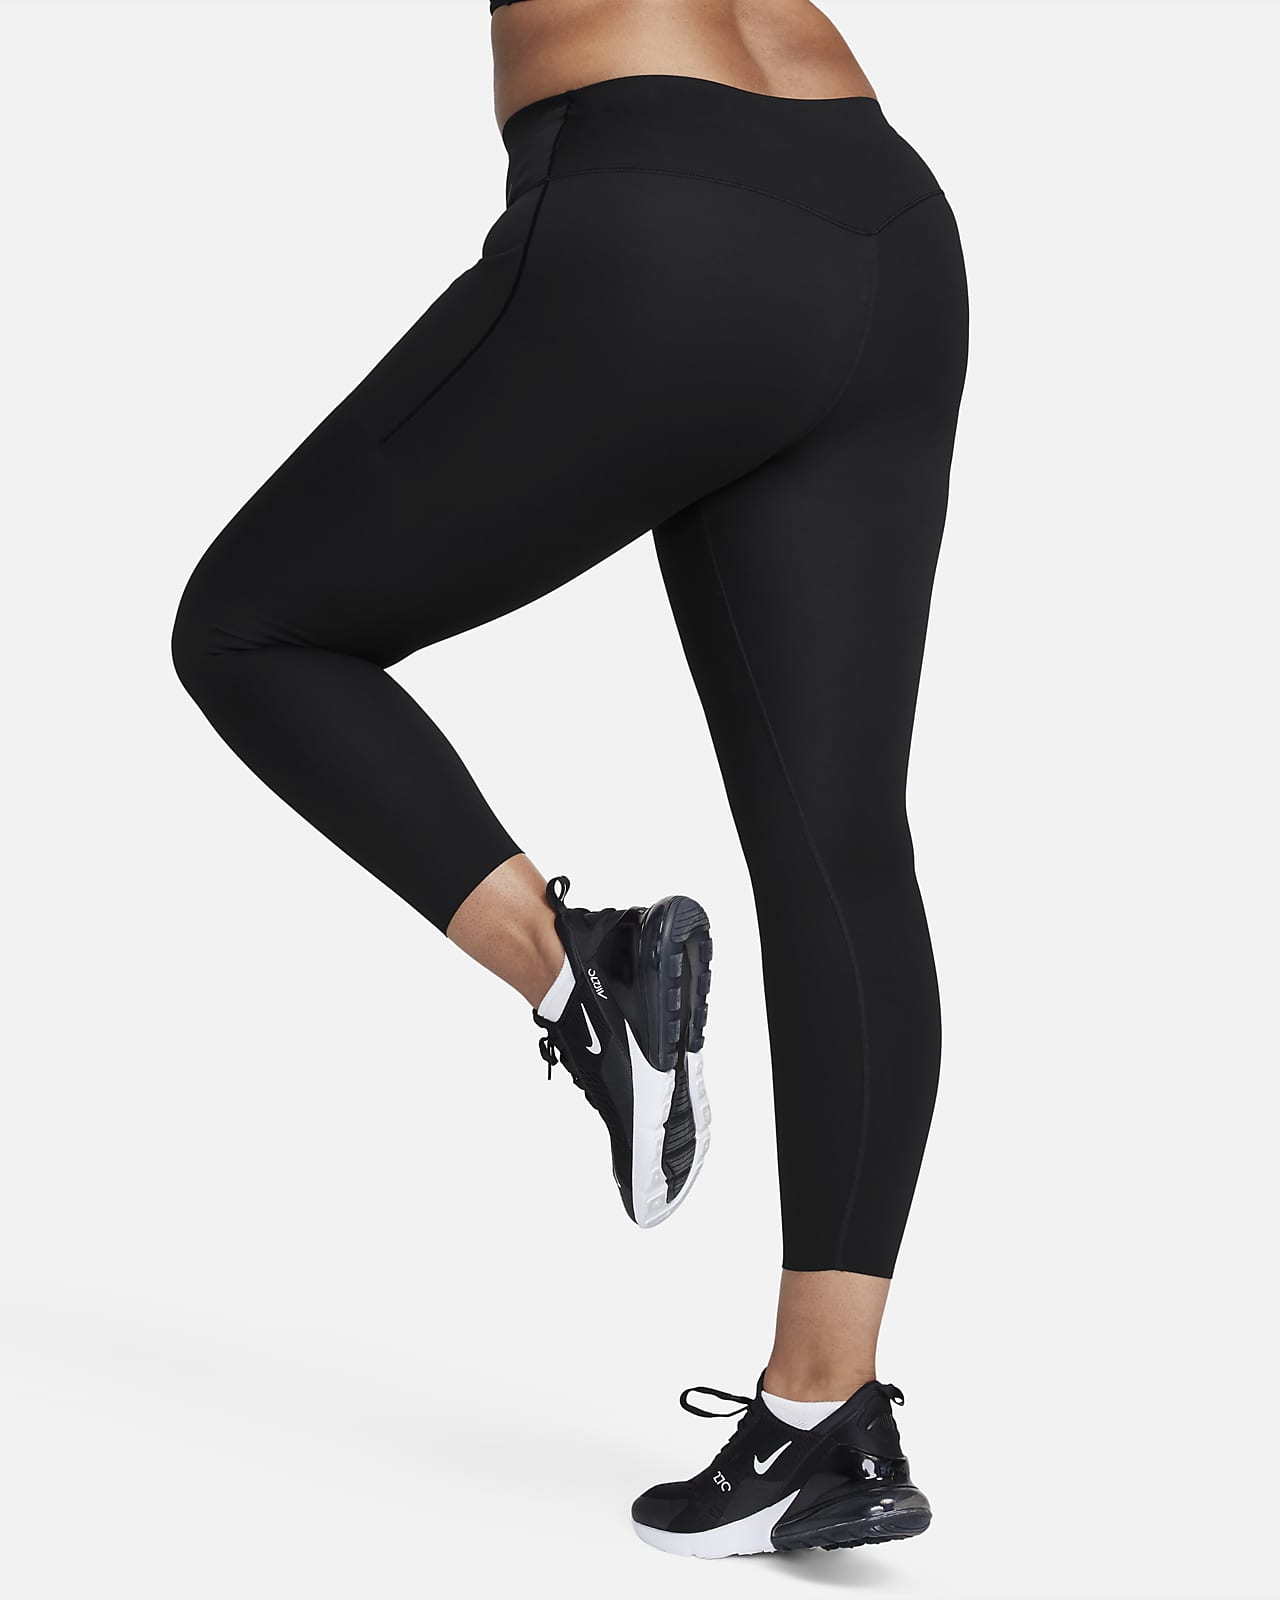 zonde binnen Medaille Nike Universa Women's Medium-Support Mid-Rise 7/8 Leggings with Pockets.  Nike.com